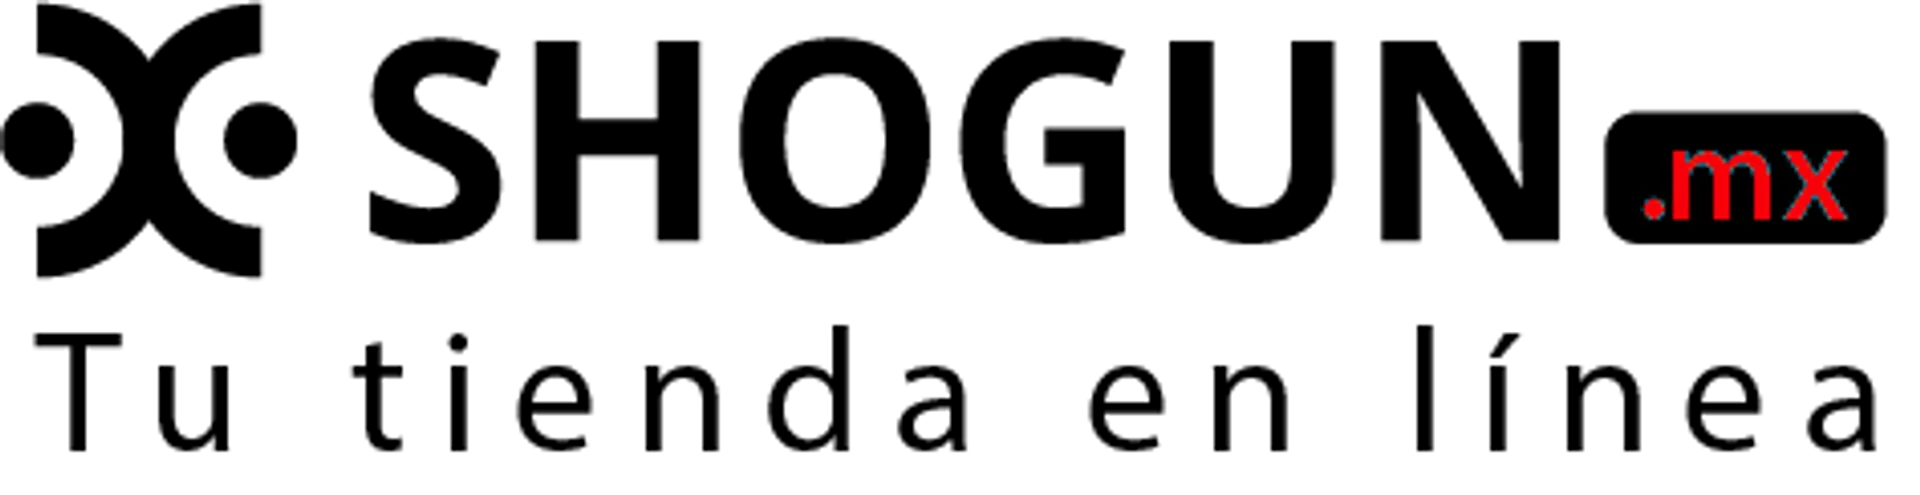 SHOGUN logo